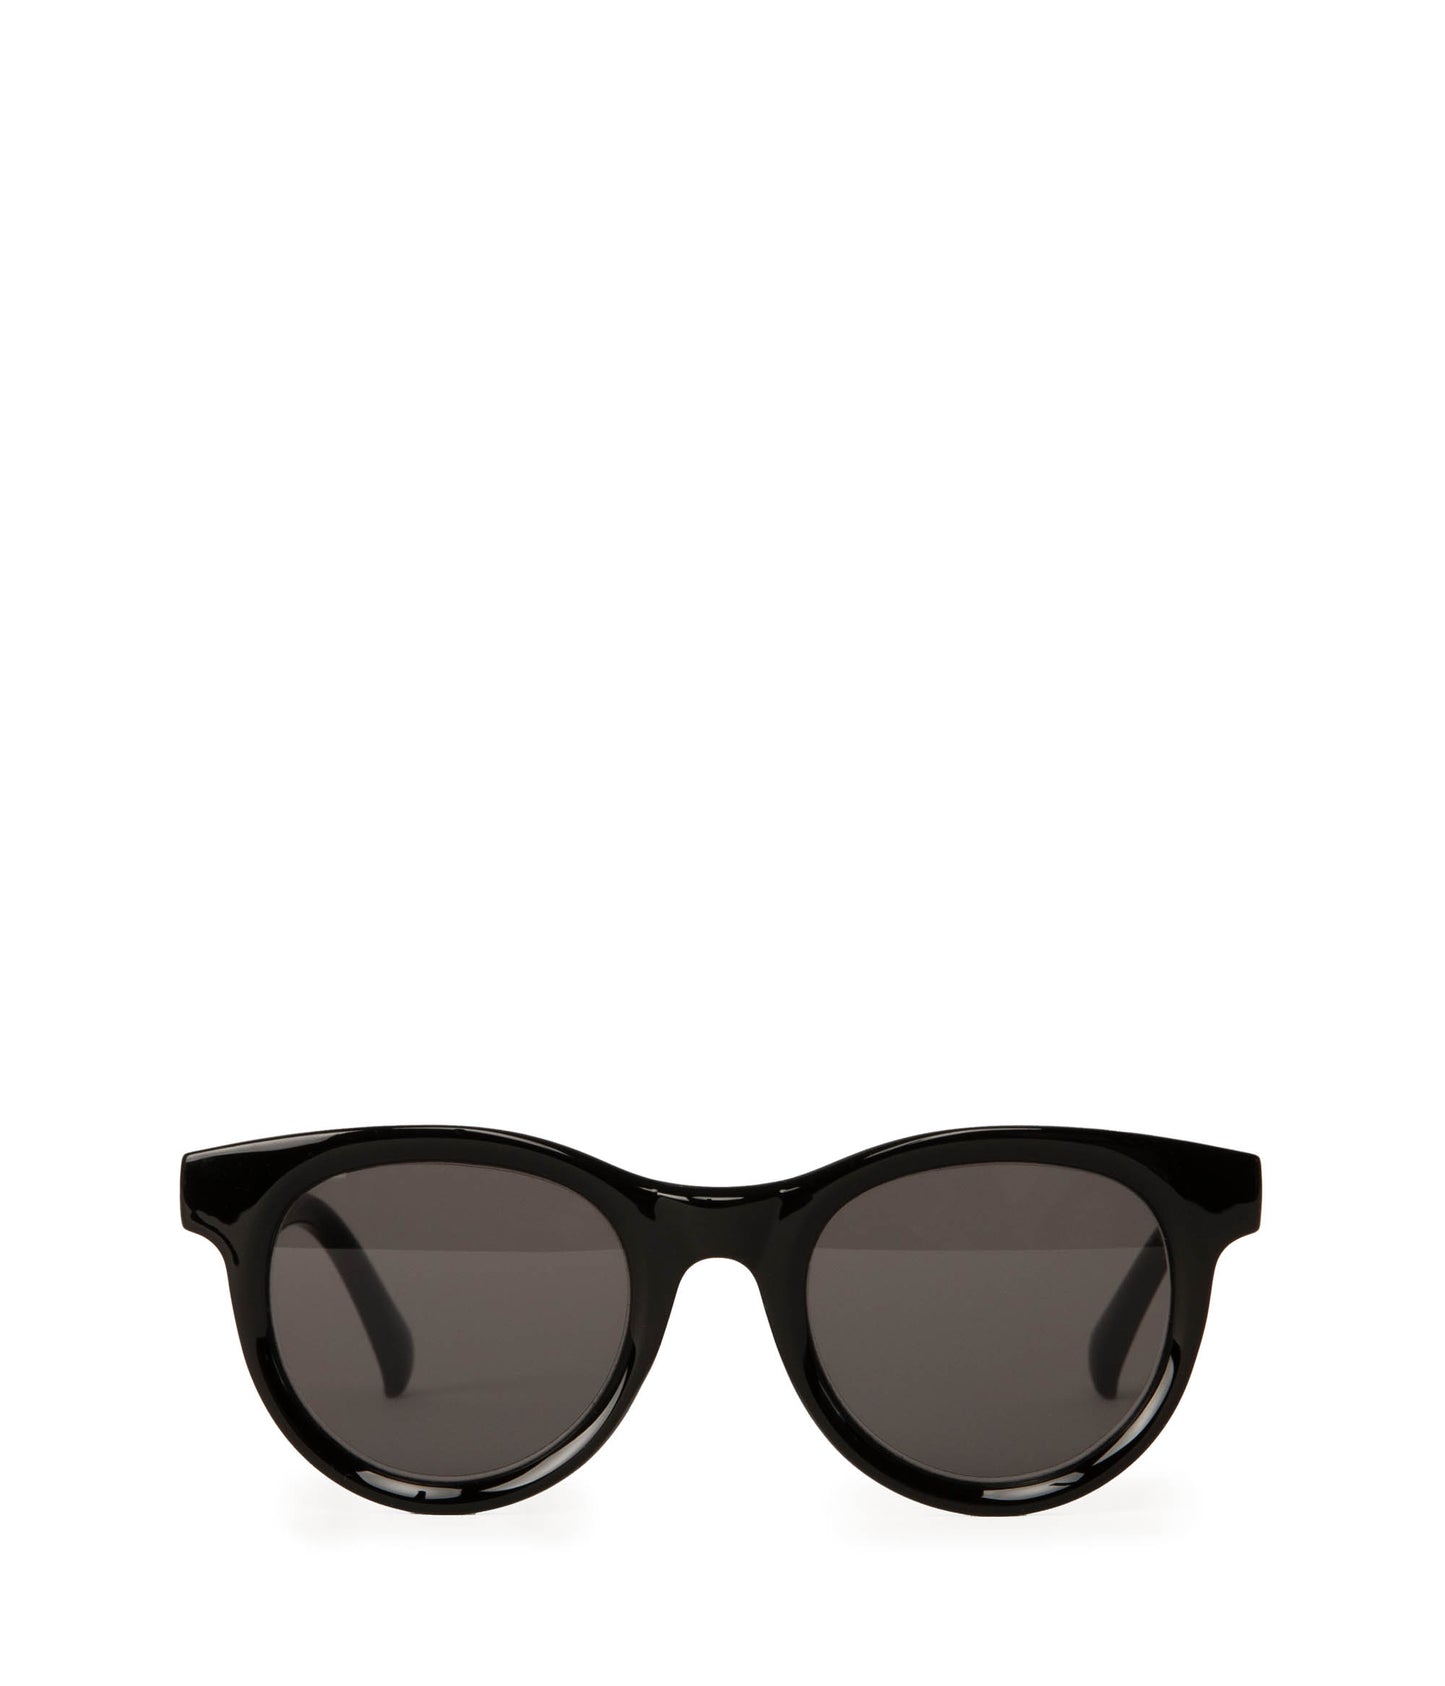 JAZI-2 Recycled Round Sunglasses | Color: Black, Grey - variant::black